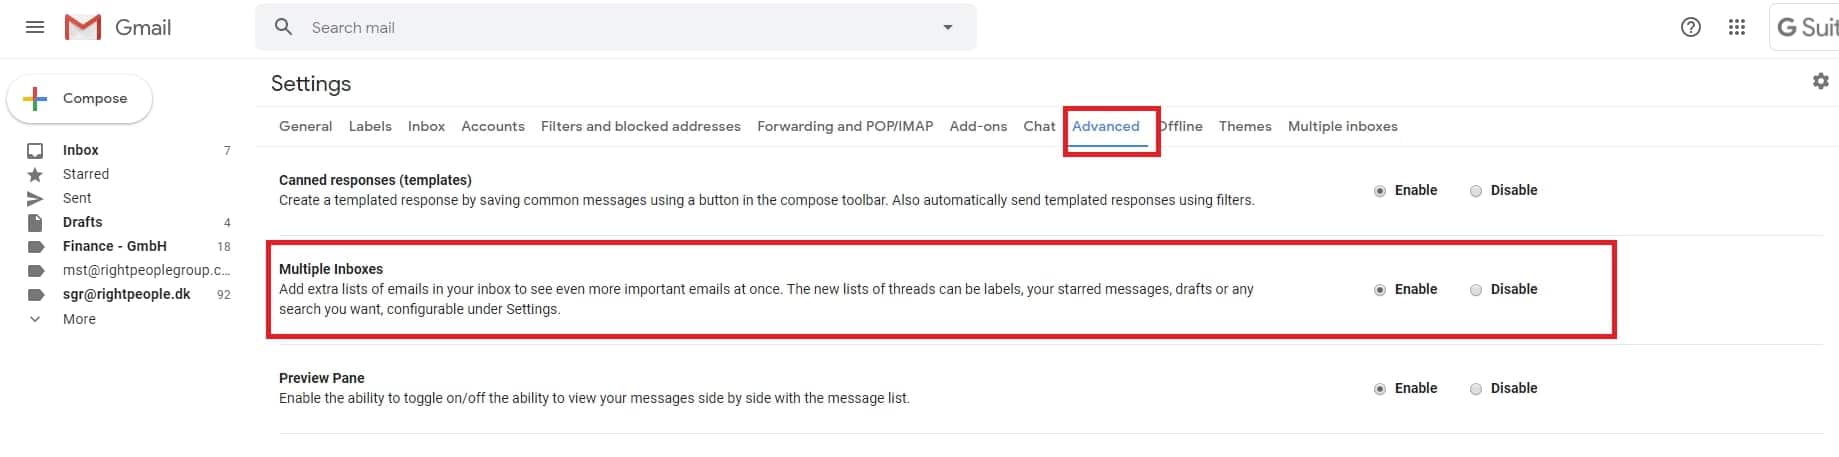 Select multiple inboxes - inbox zero concept